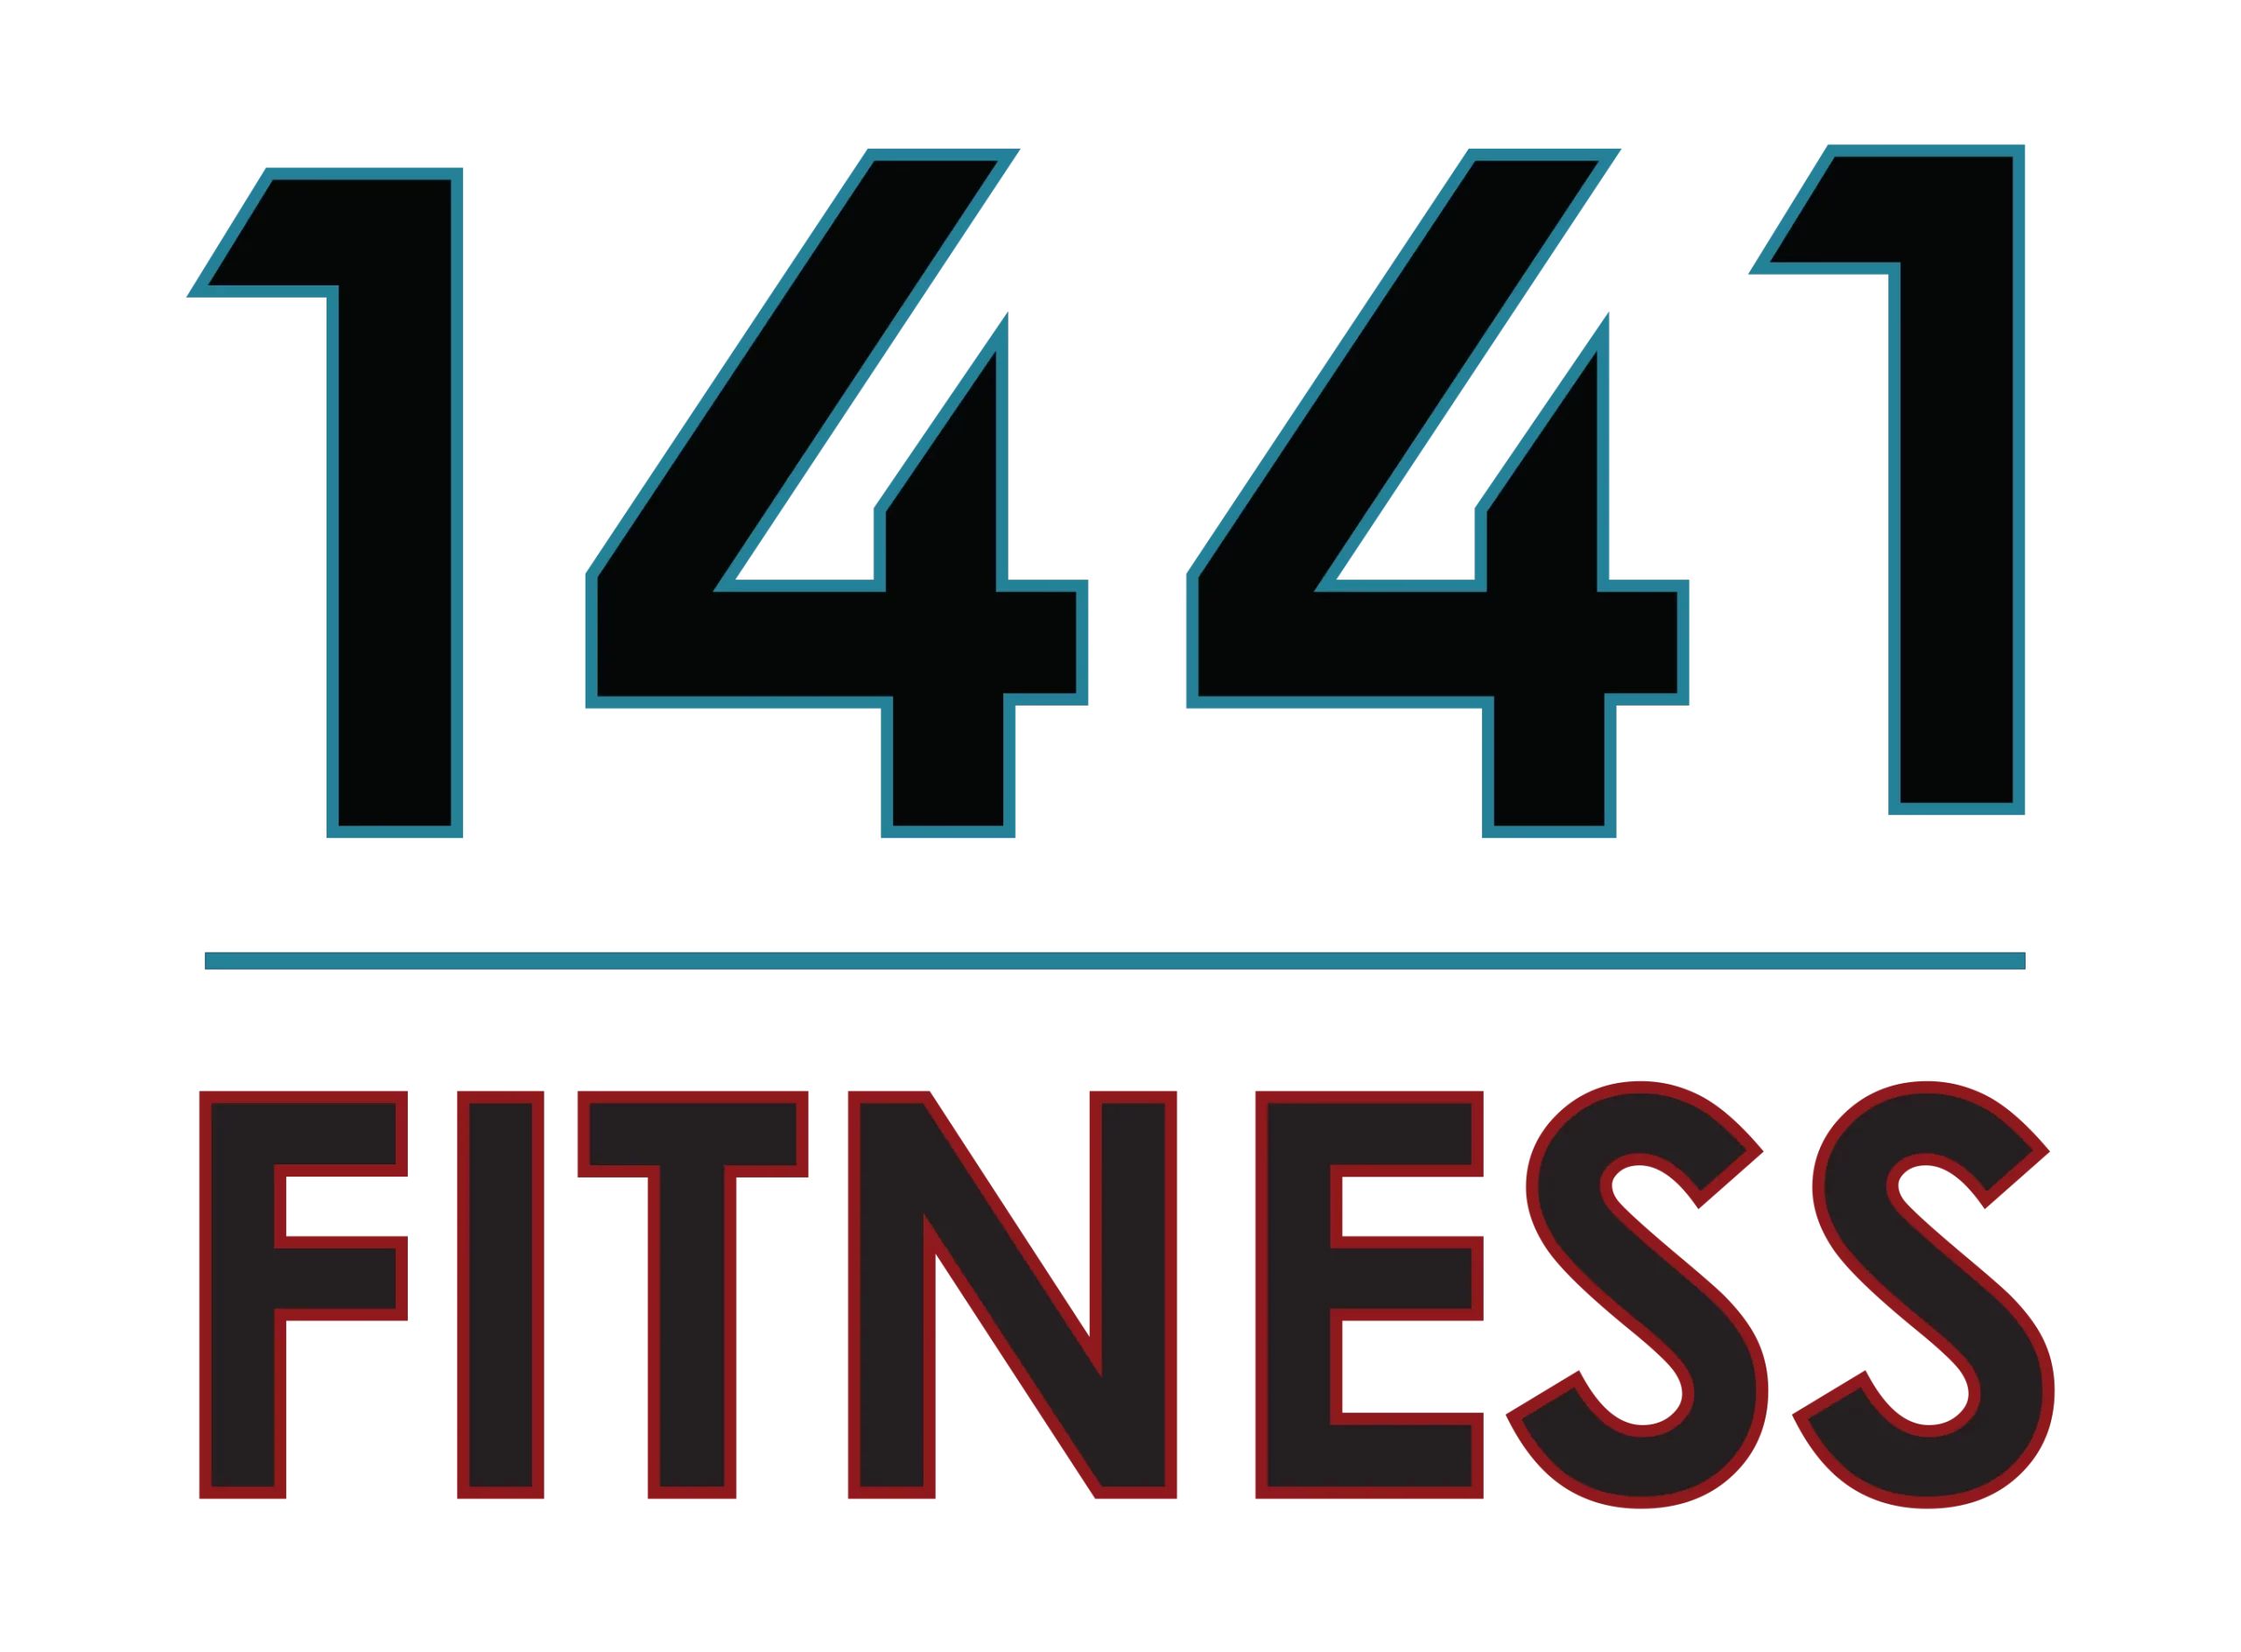 1441 Fitness